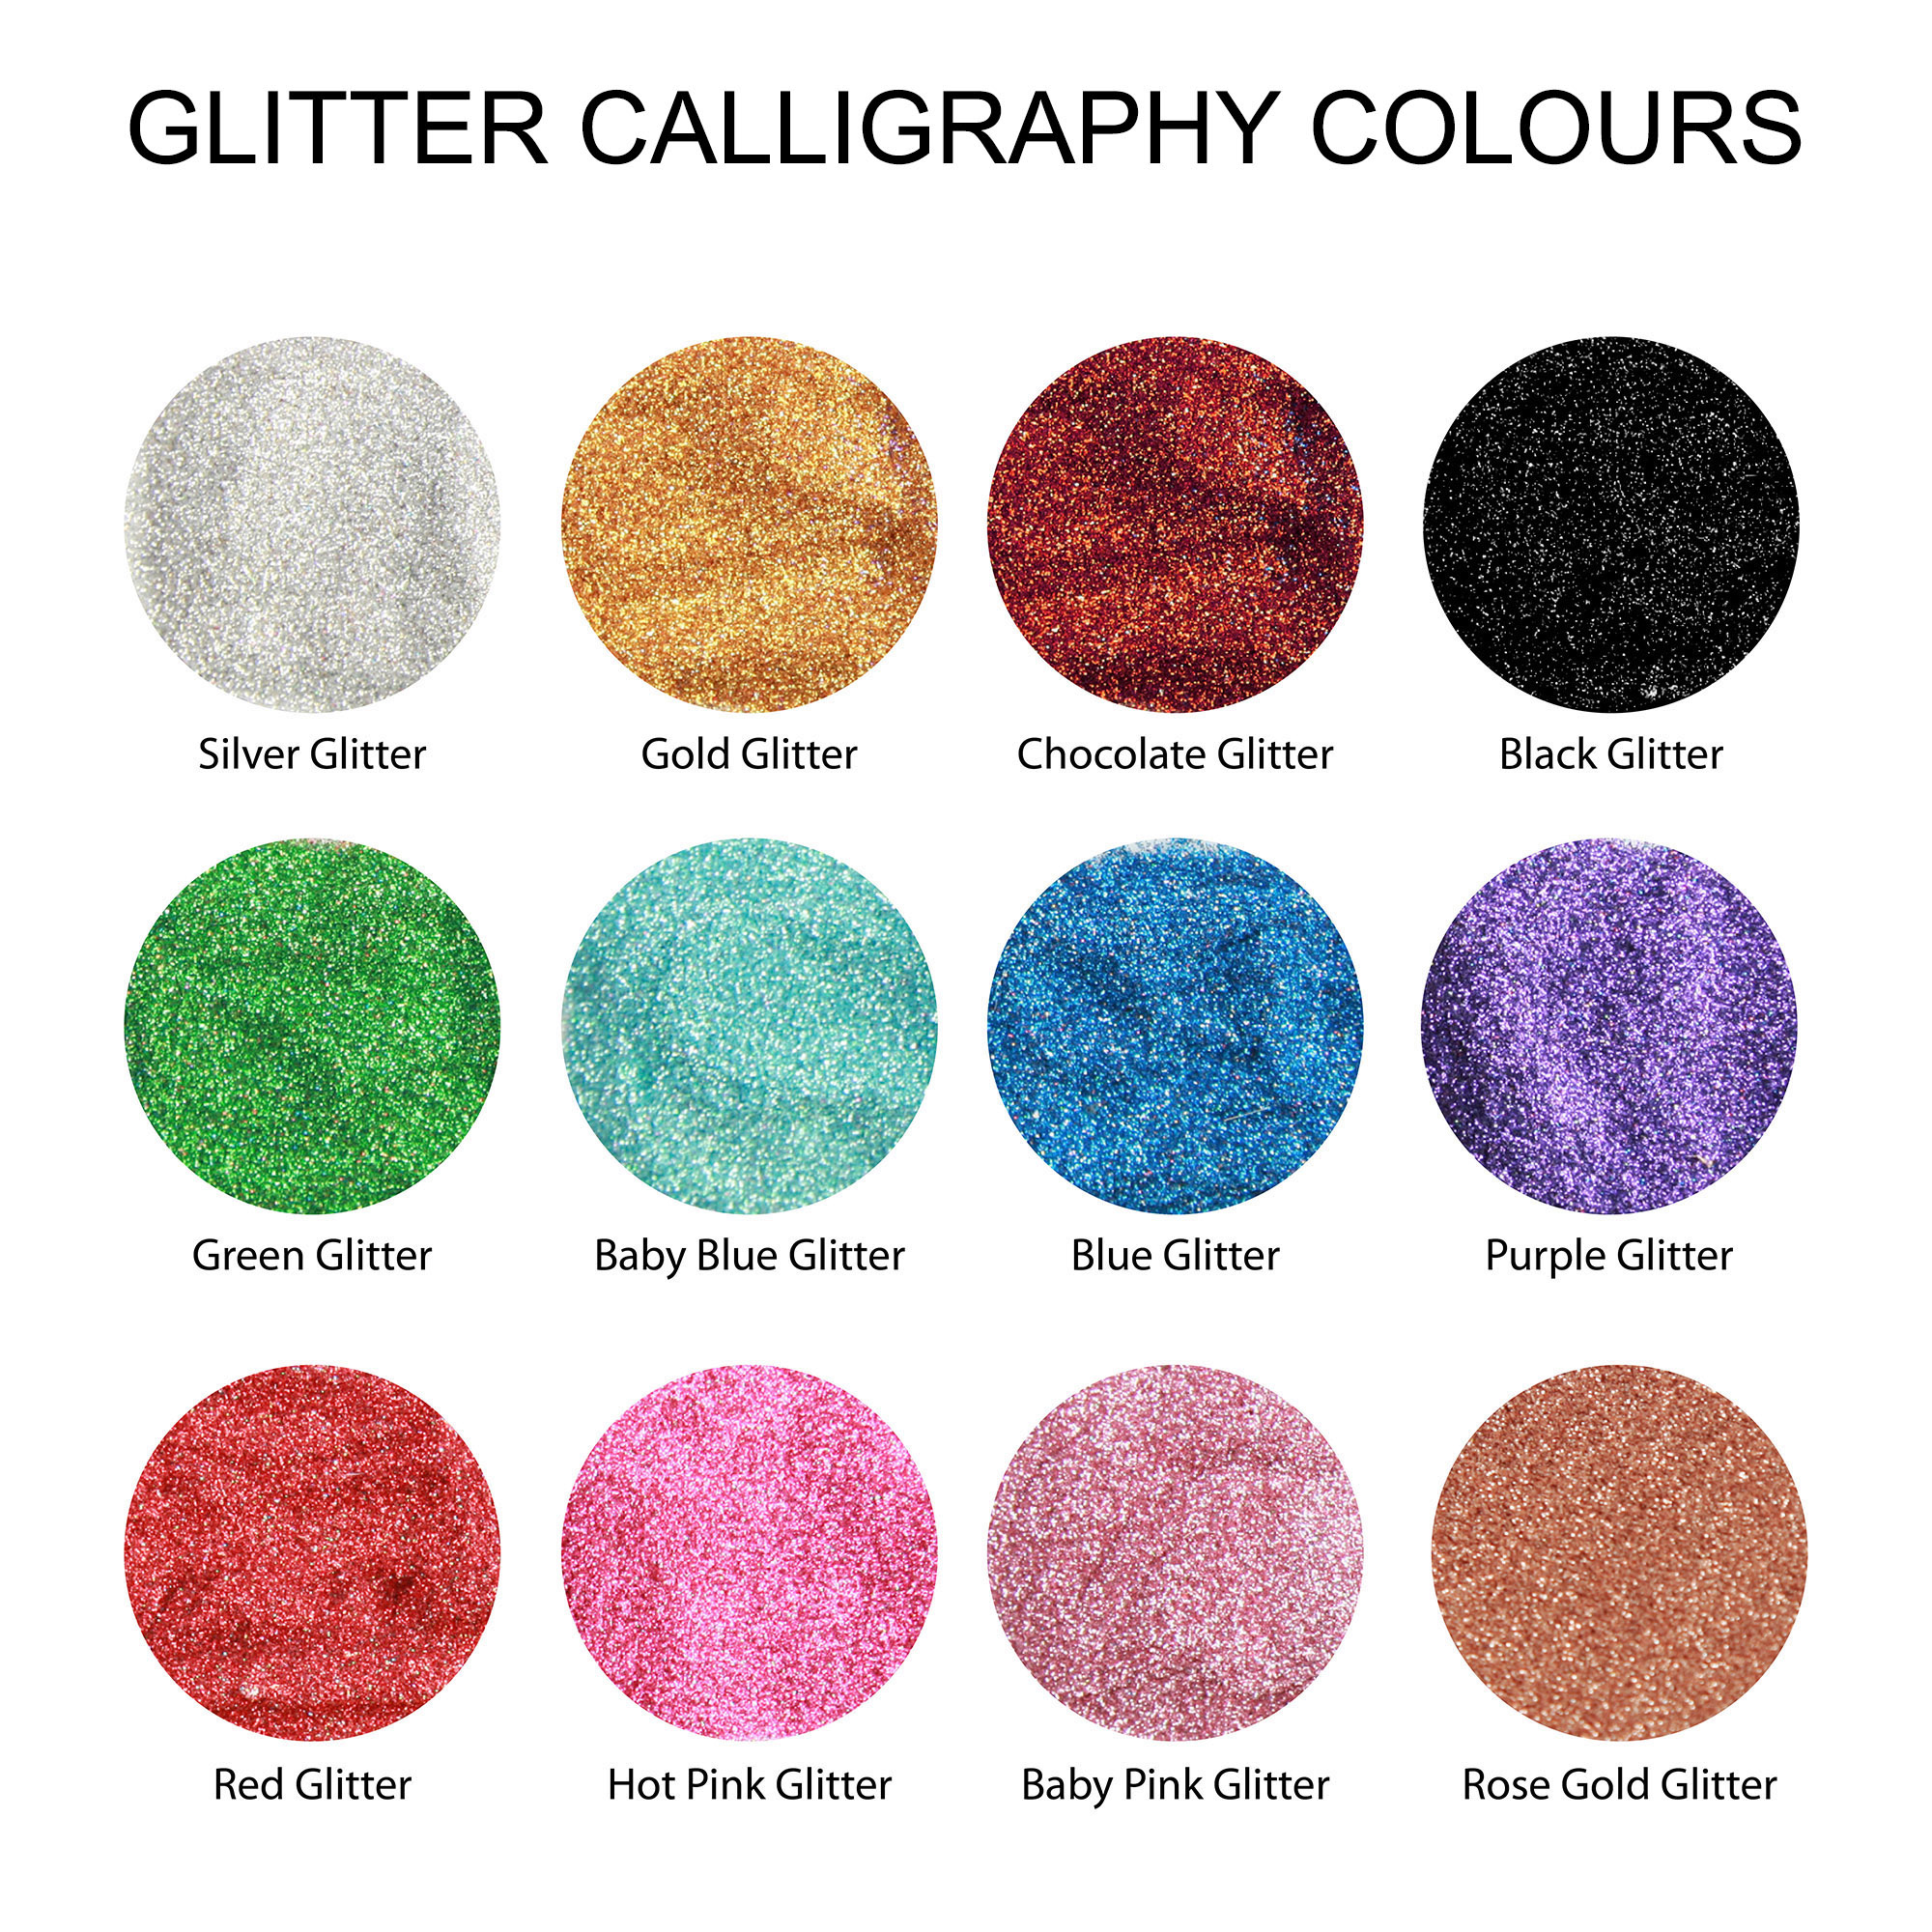 Glitter Calligraphy Colours